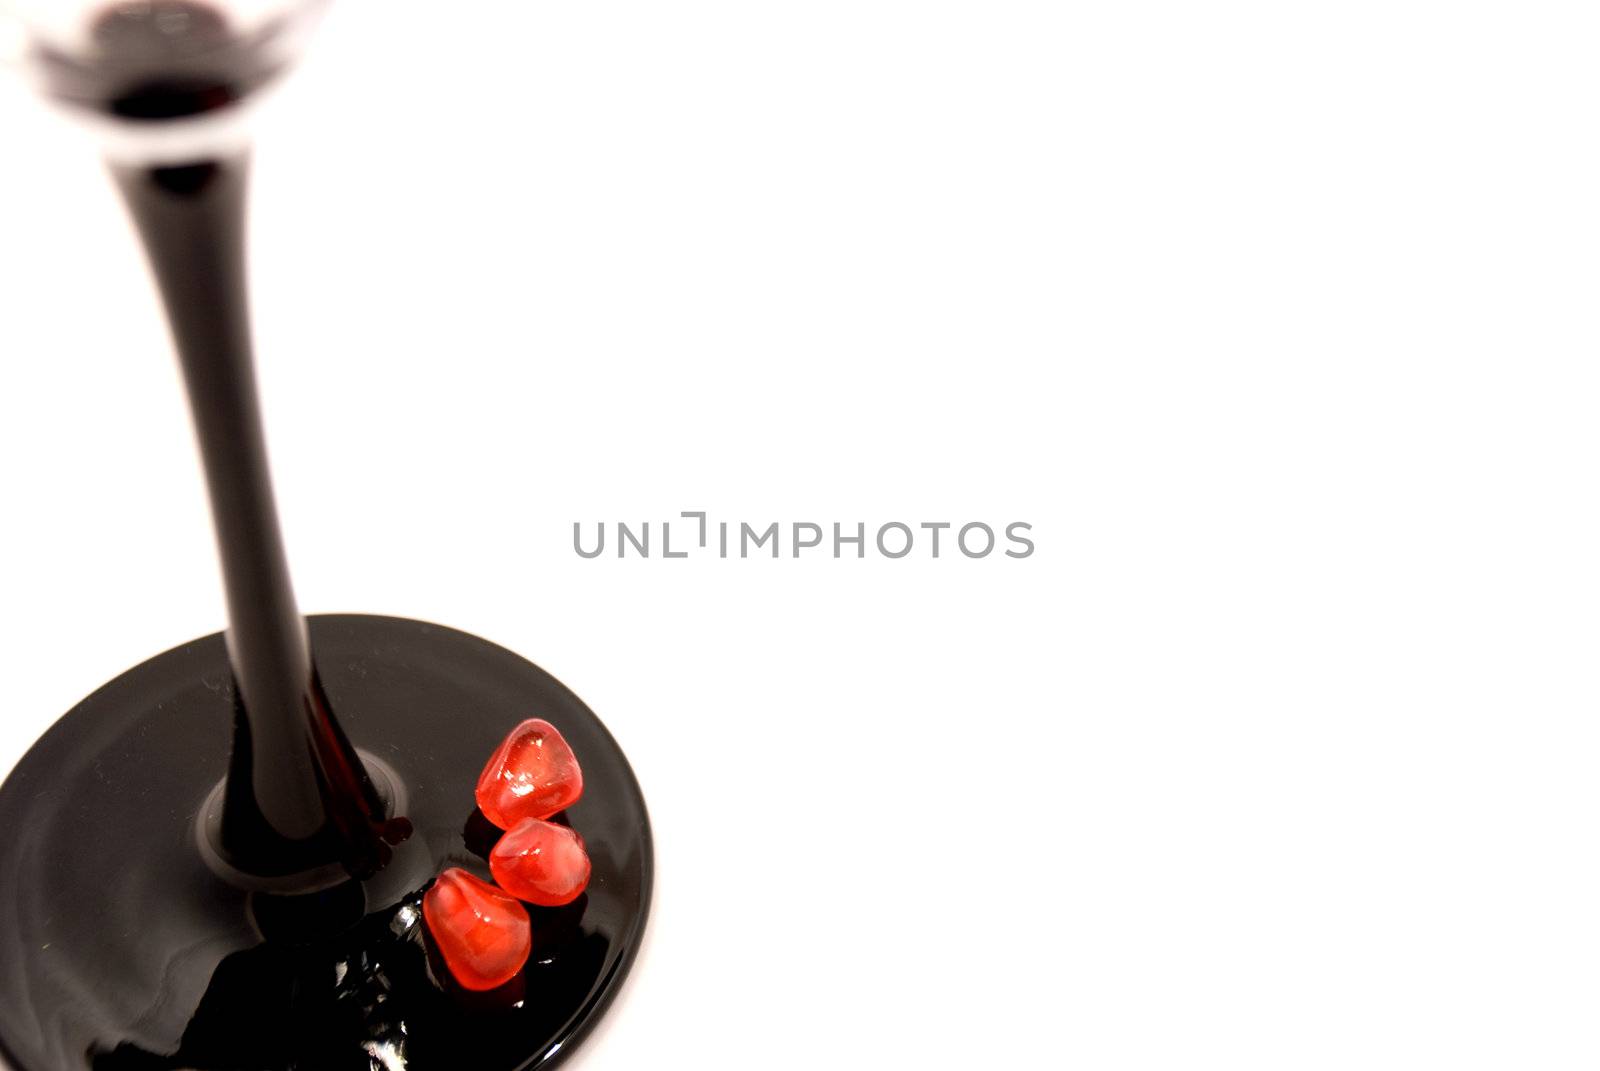 Seeds grenade to stem wine glasses
